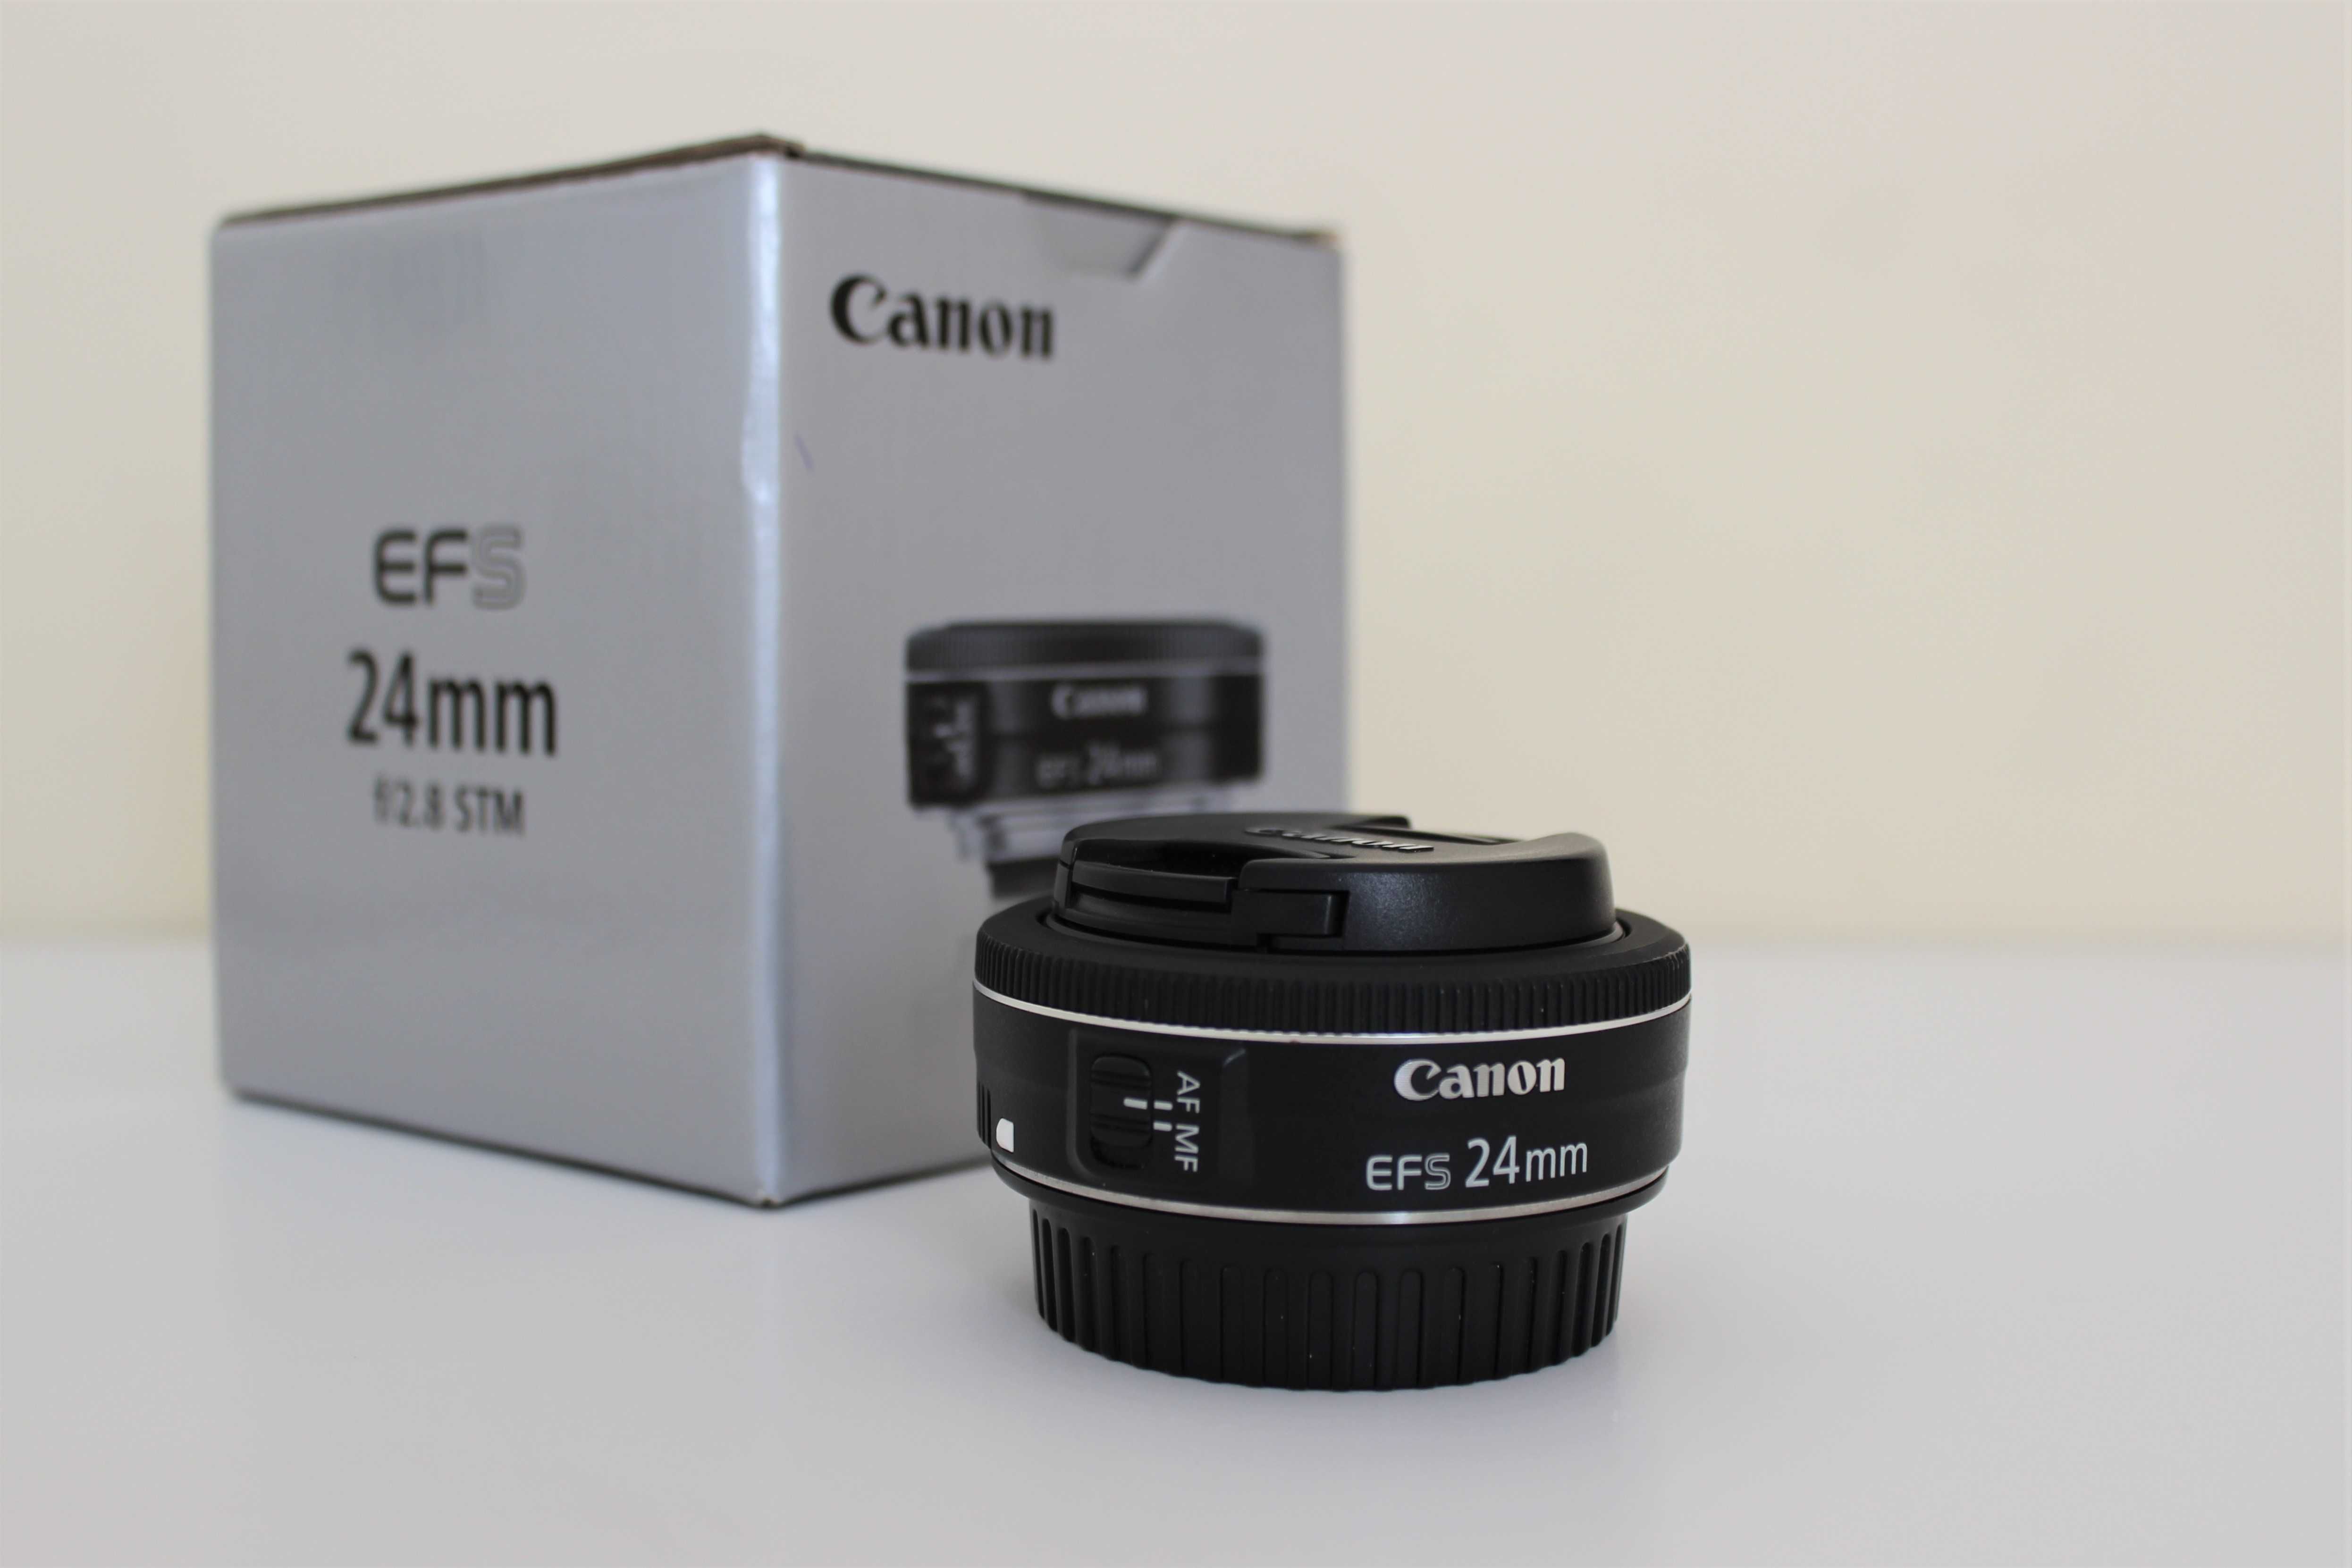 Objetiva Canon EF-S 24mm f/2.8 STM com uv filter Hoya UX